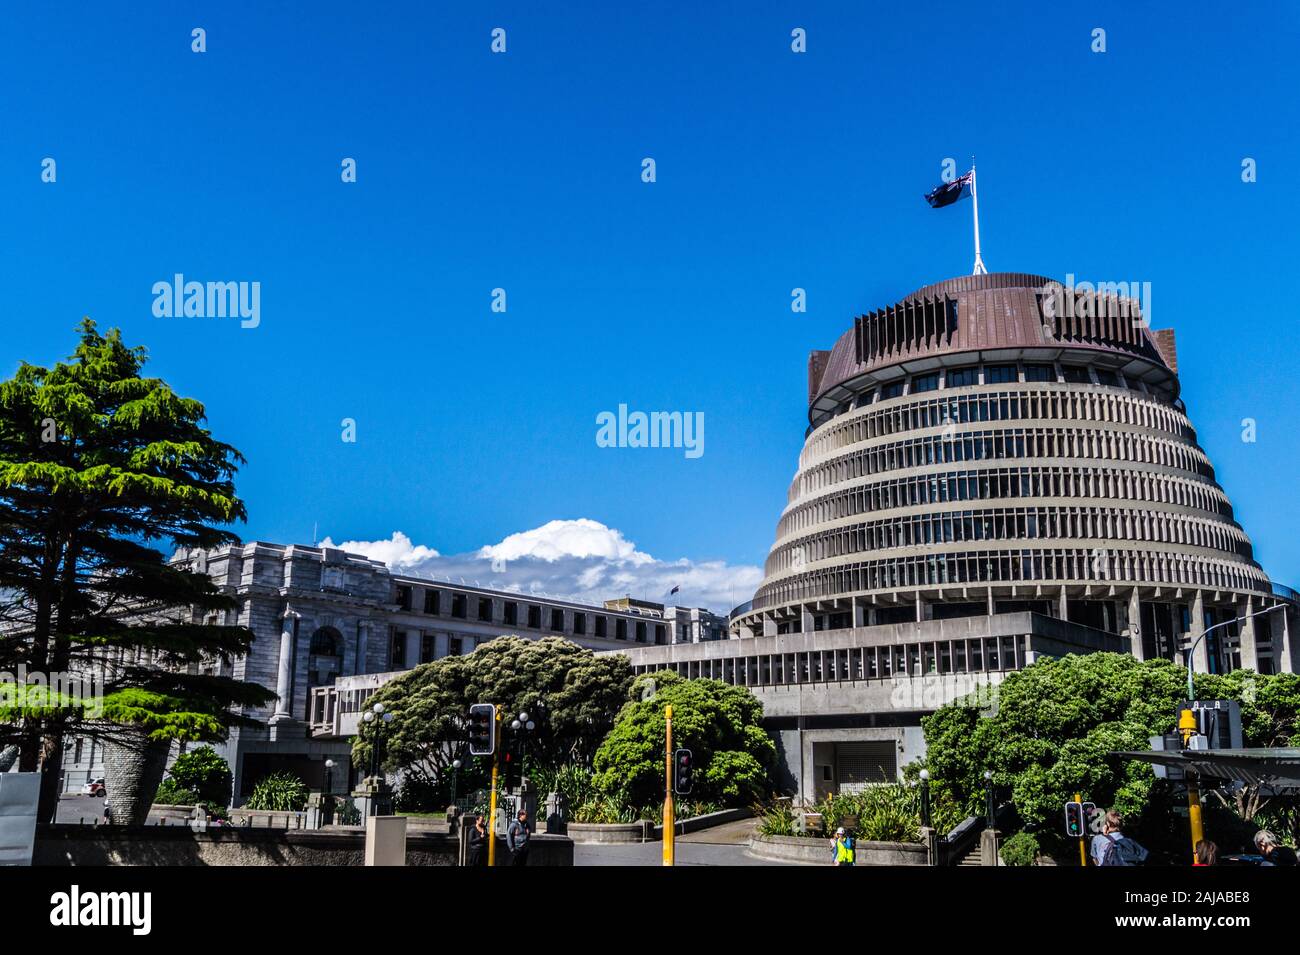 'L'Alveare' edificio governativo da Basil Spence e Fergus Sheppard, 1969-1979, Wellington, Nuova Zelanda Foto Stock